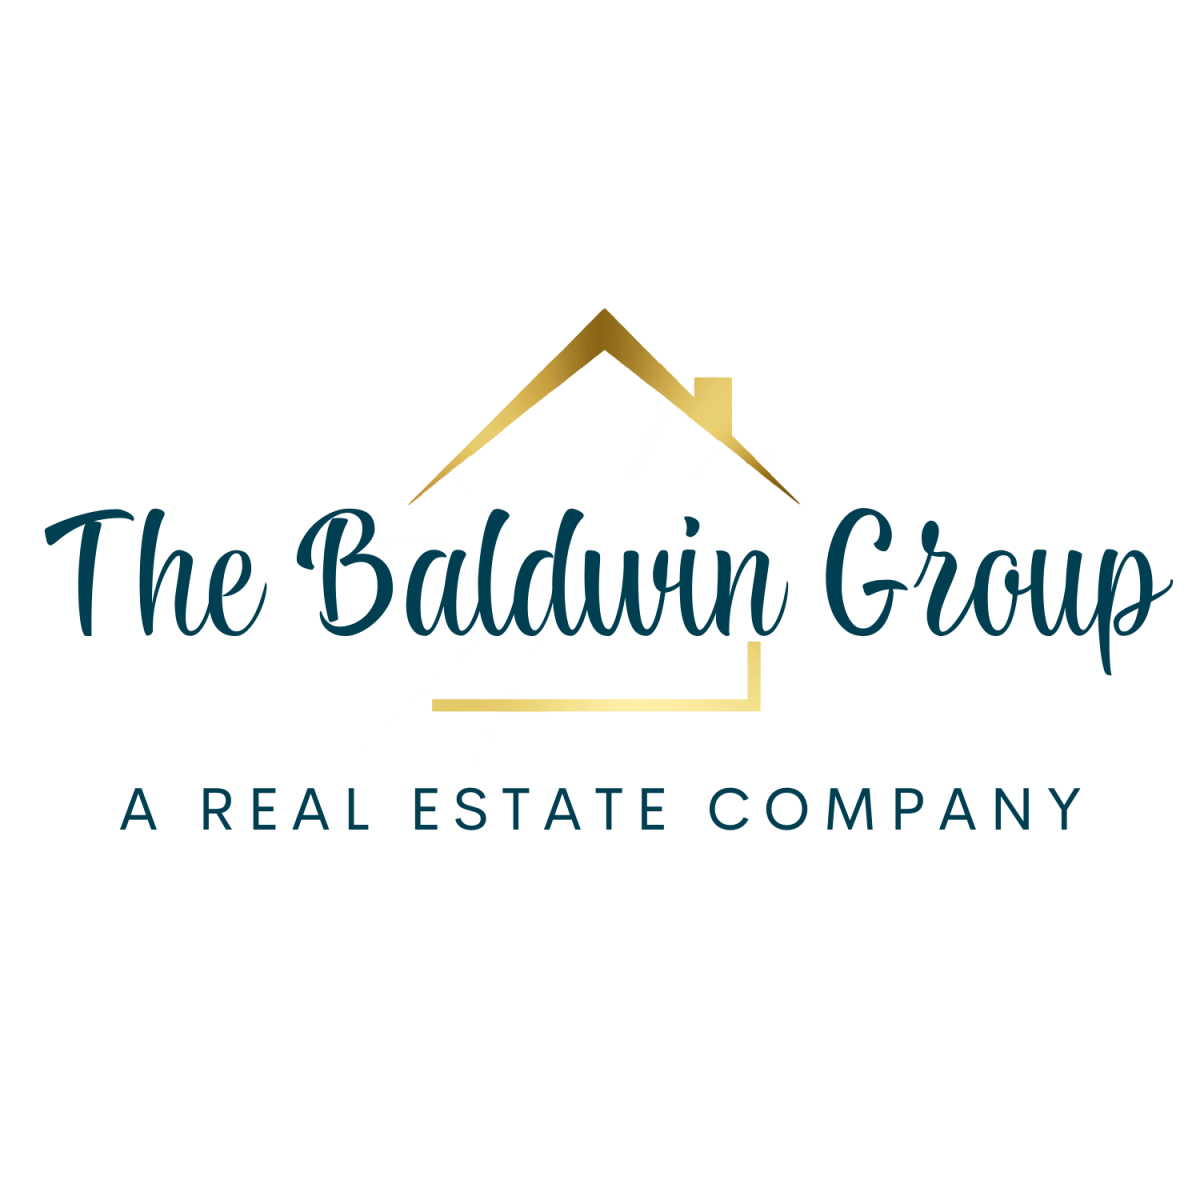 The Baldwin Group